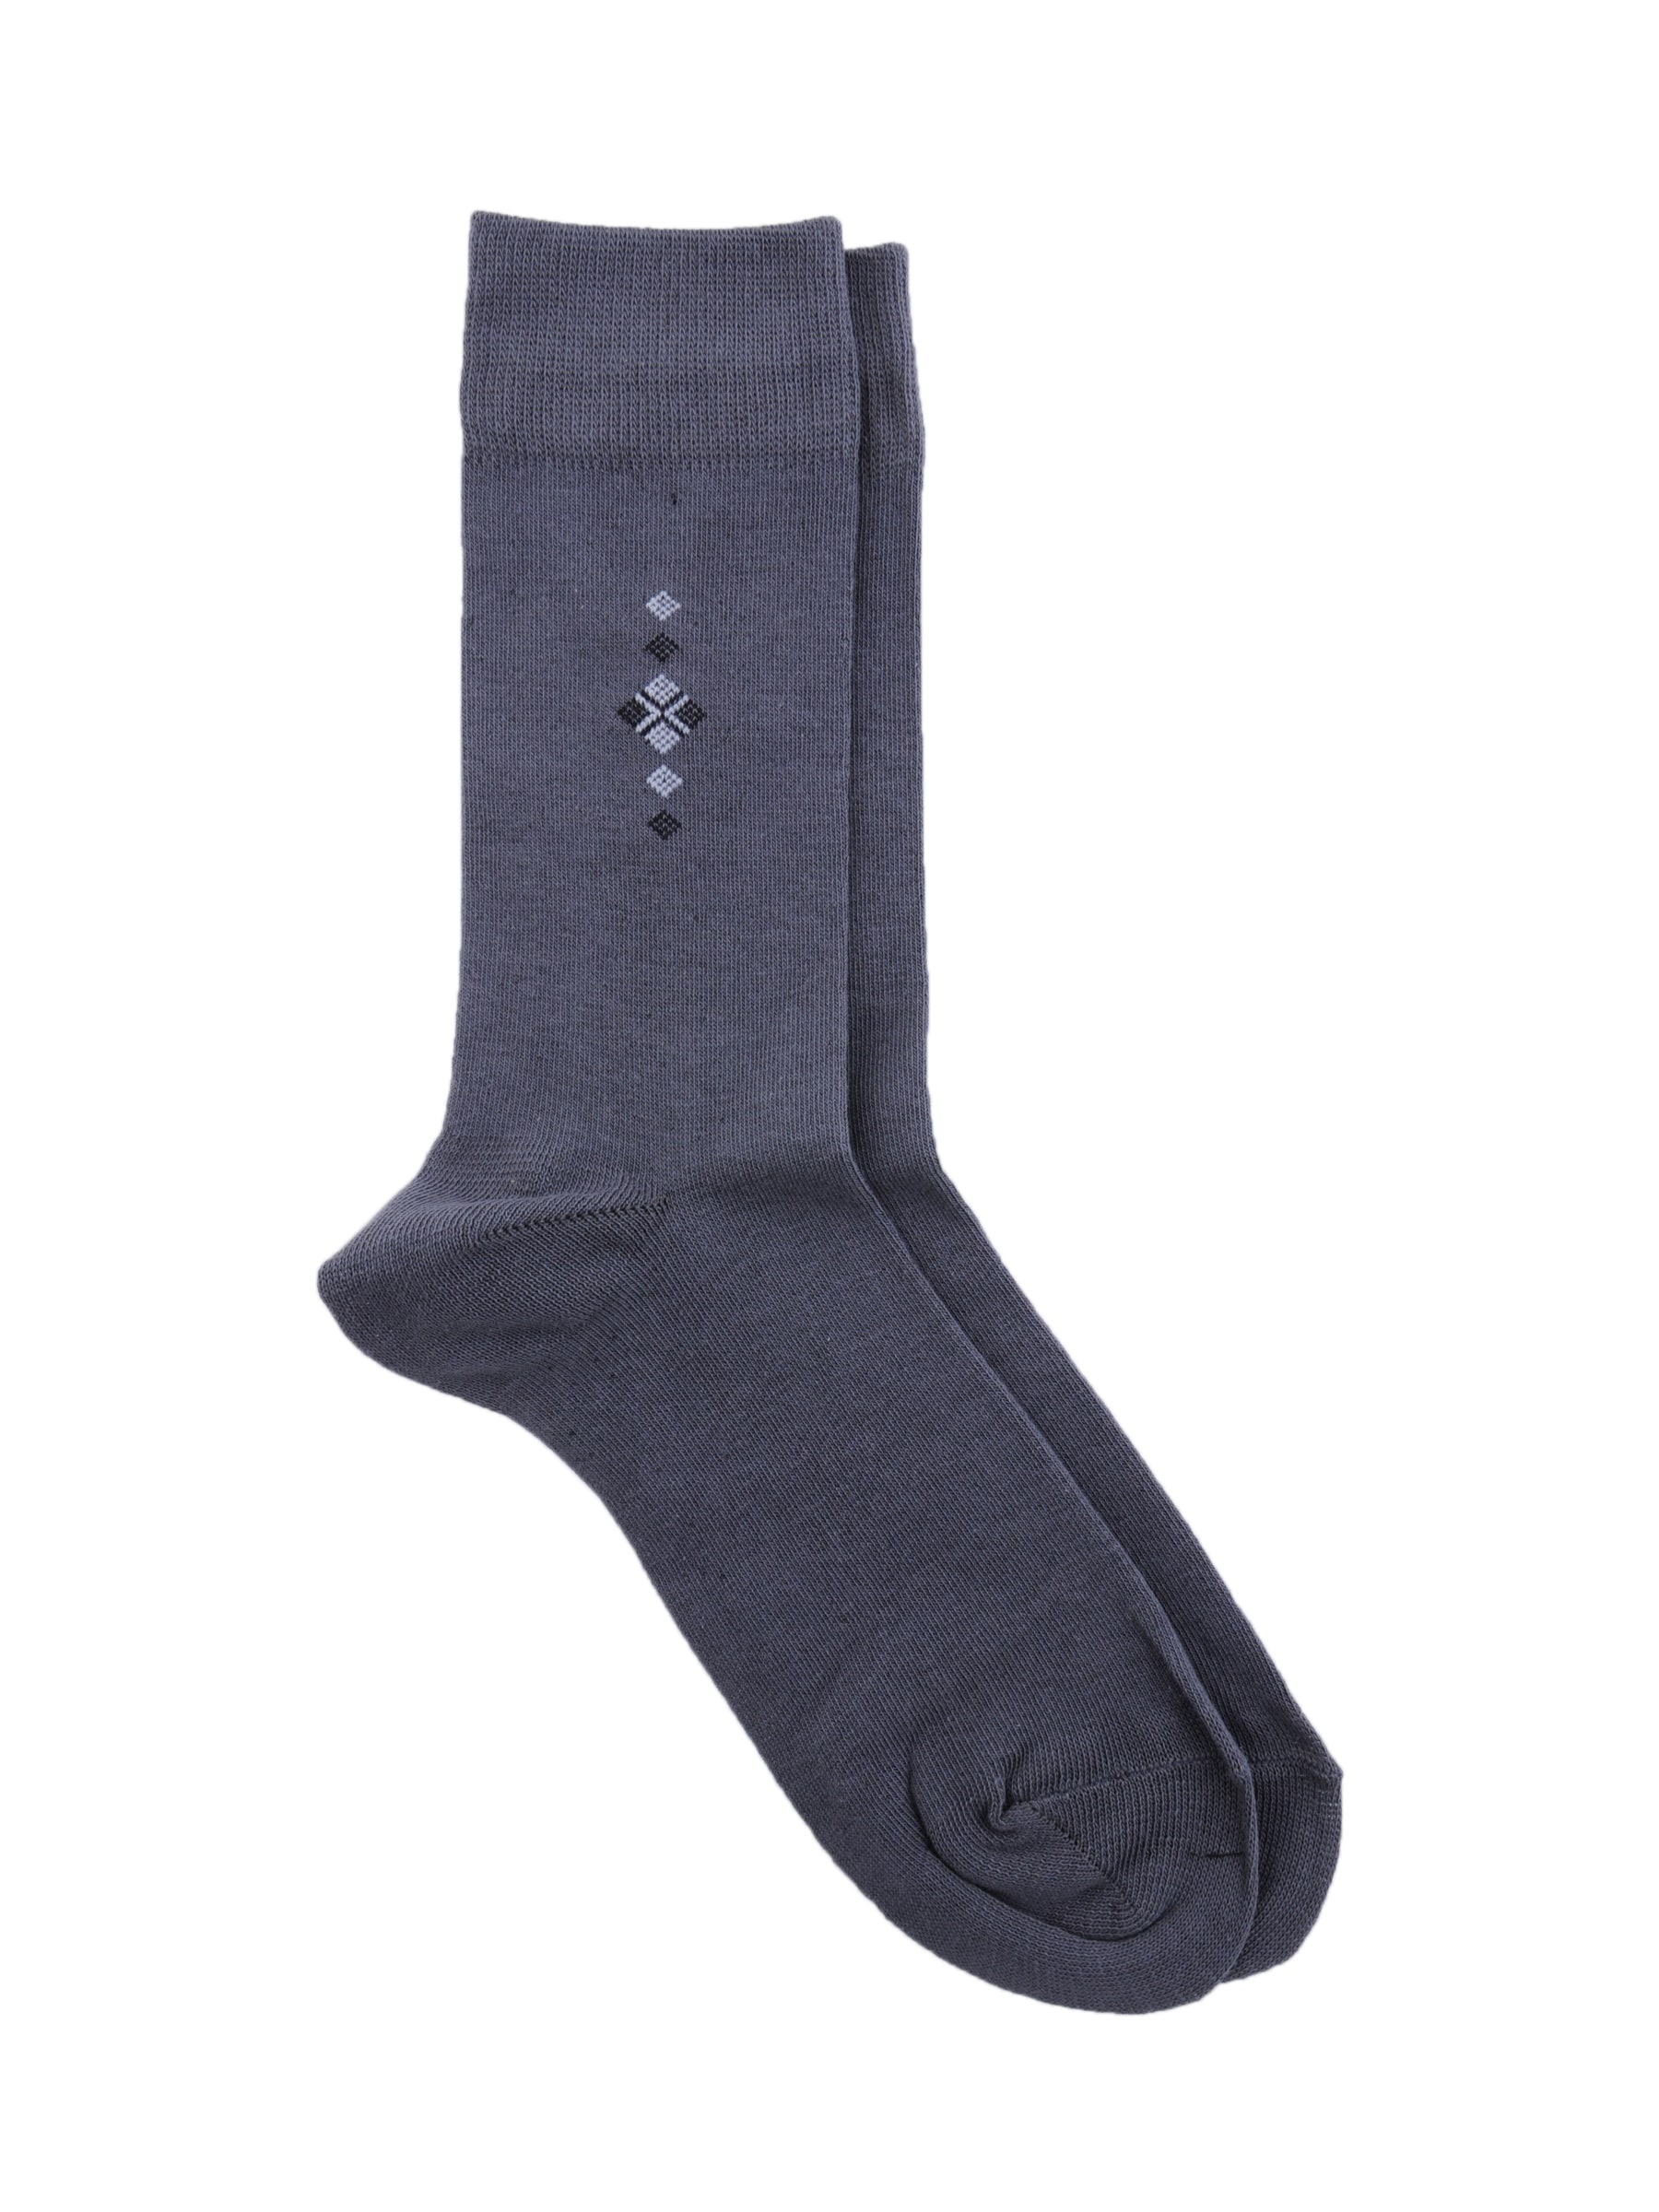 Reid & Taylor Men Solid Grey Socks